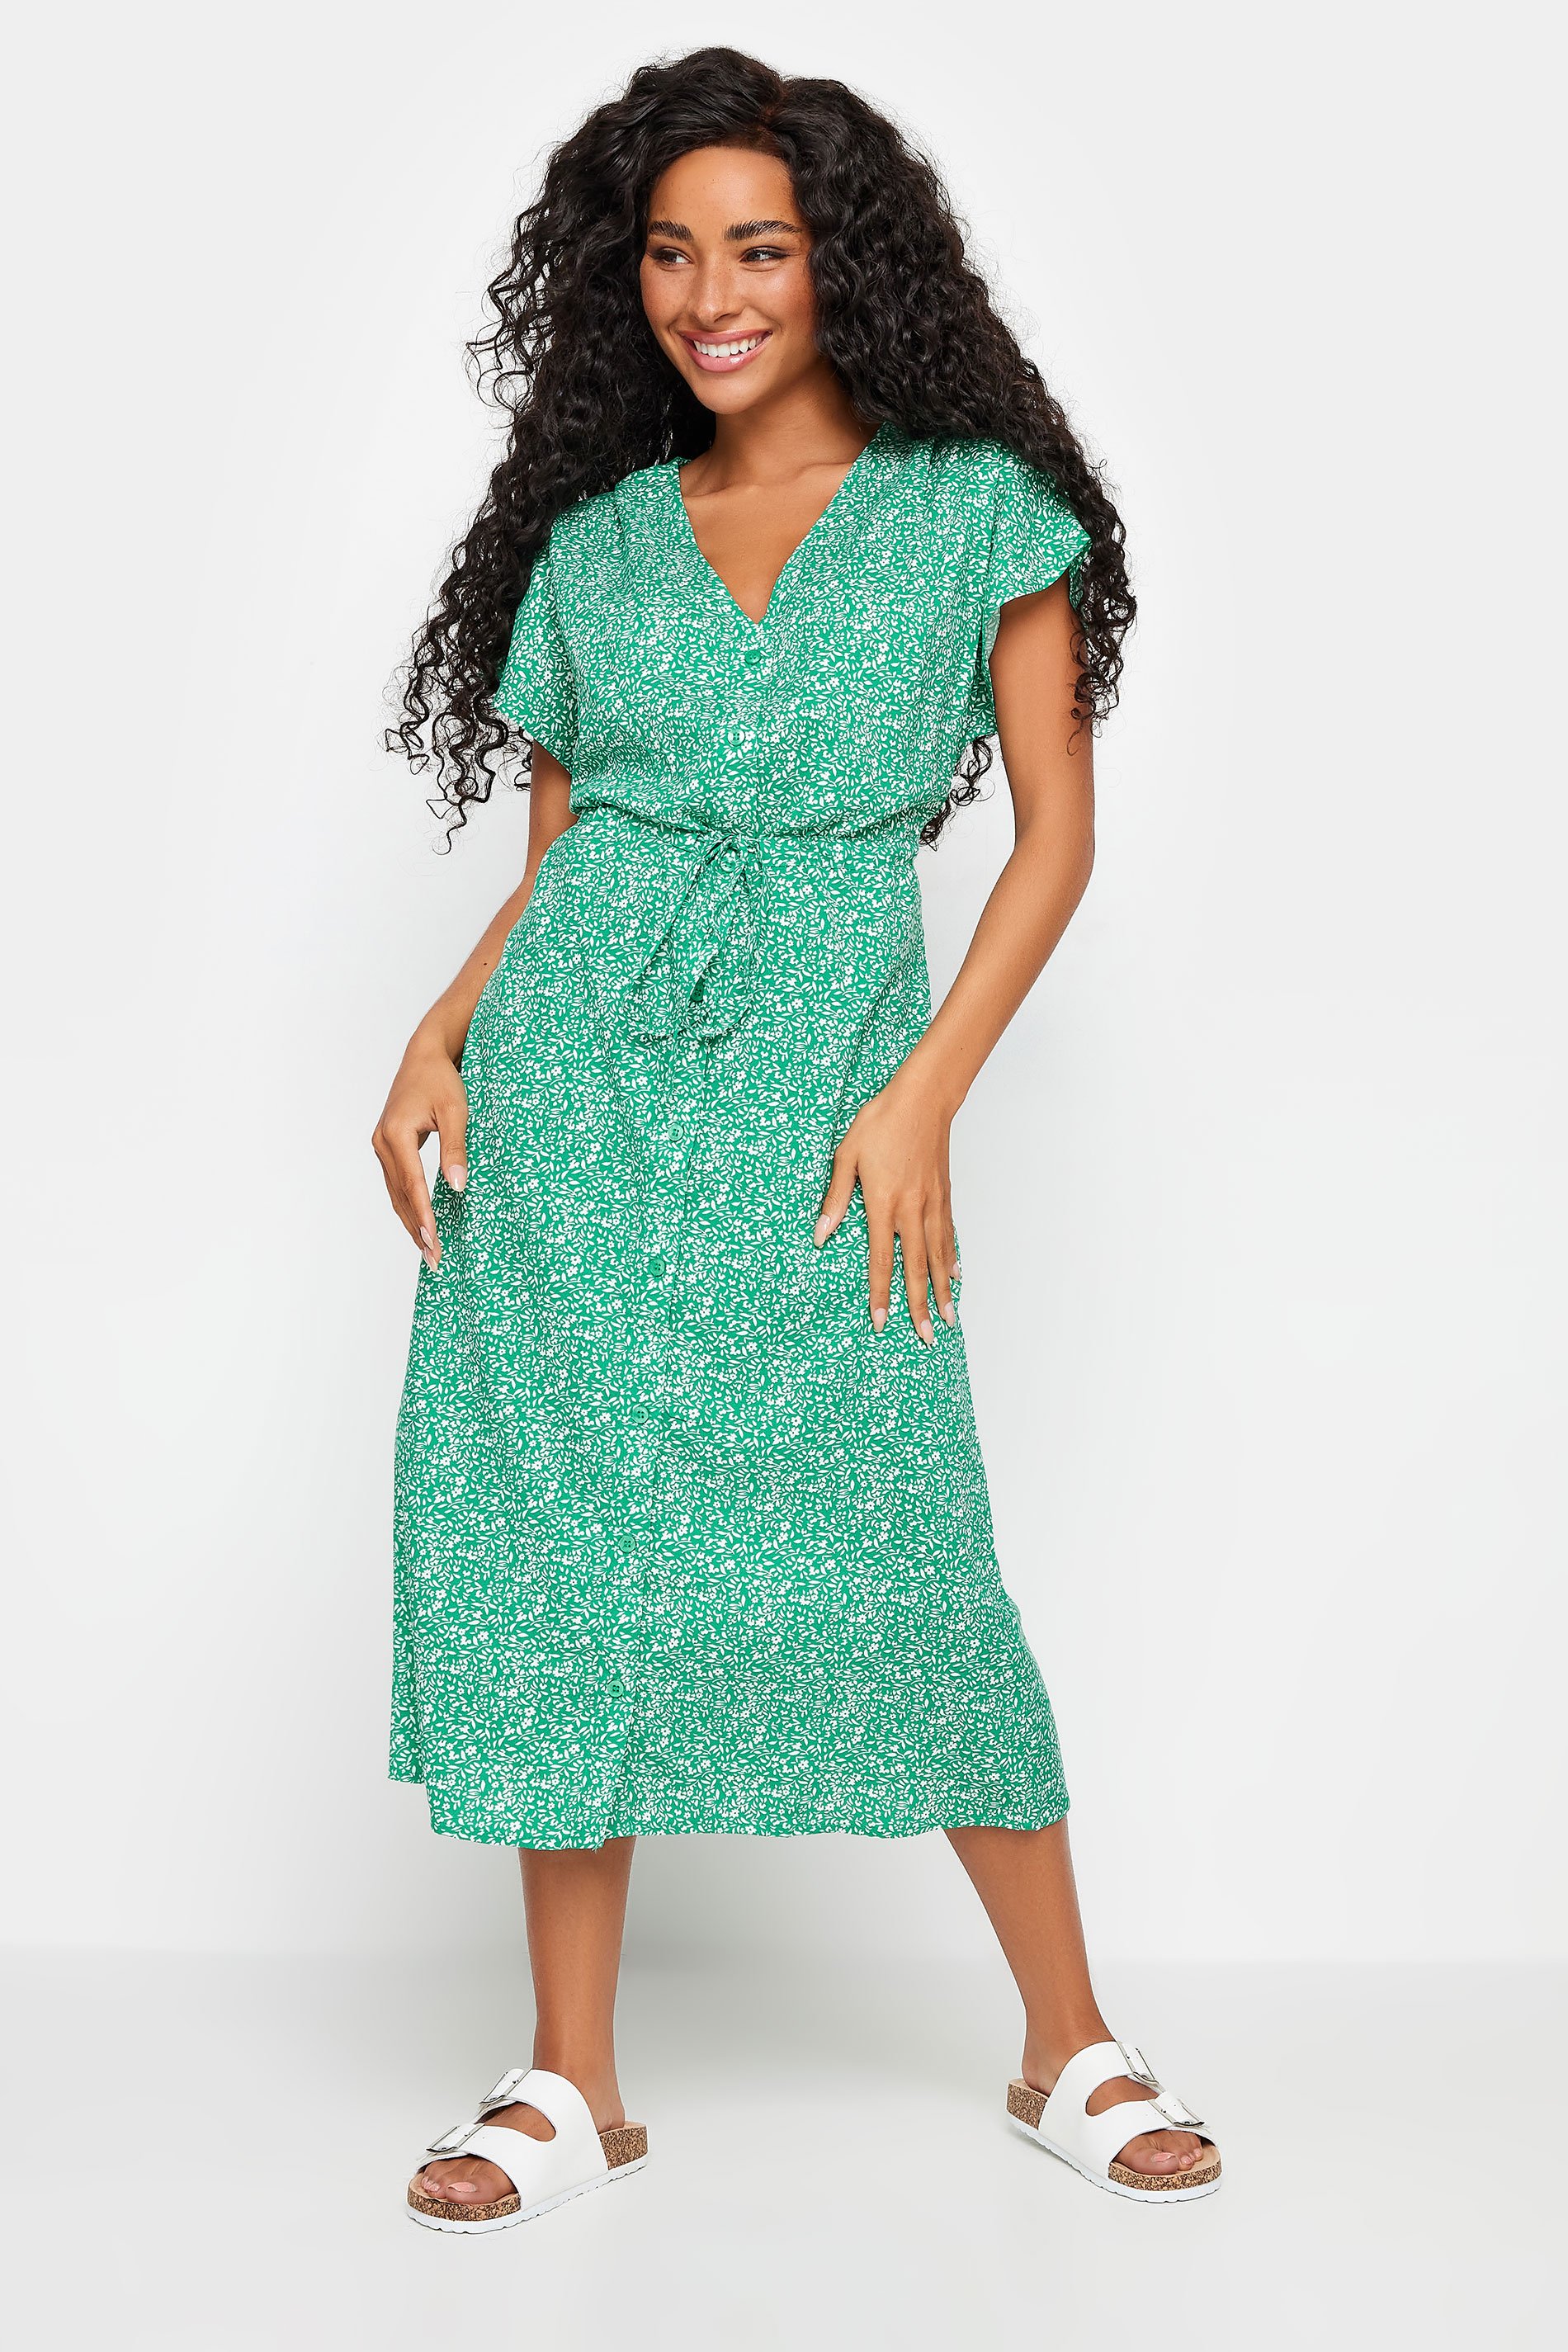 M&Co Petite Green Ditsy Floral Tie Waist Dress | M&Co 2